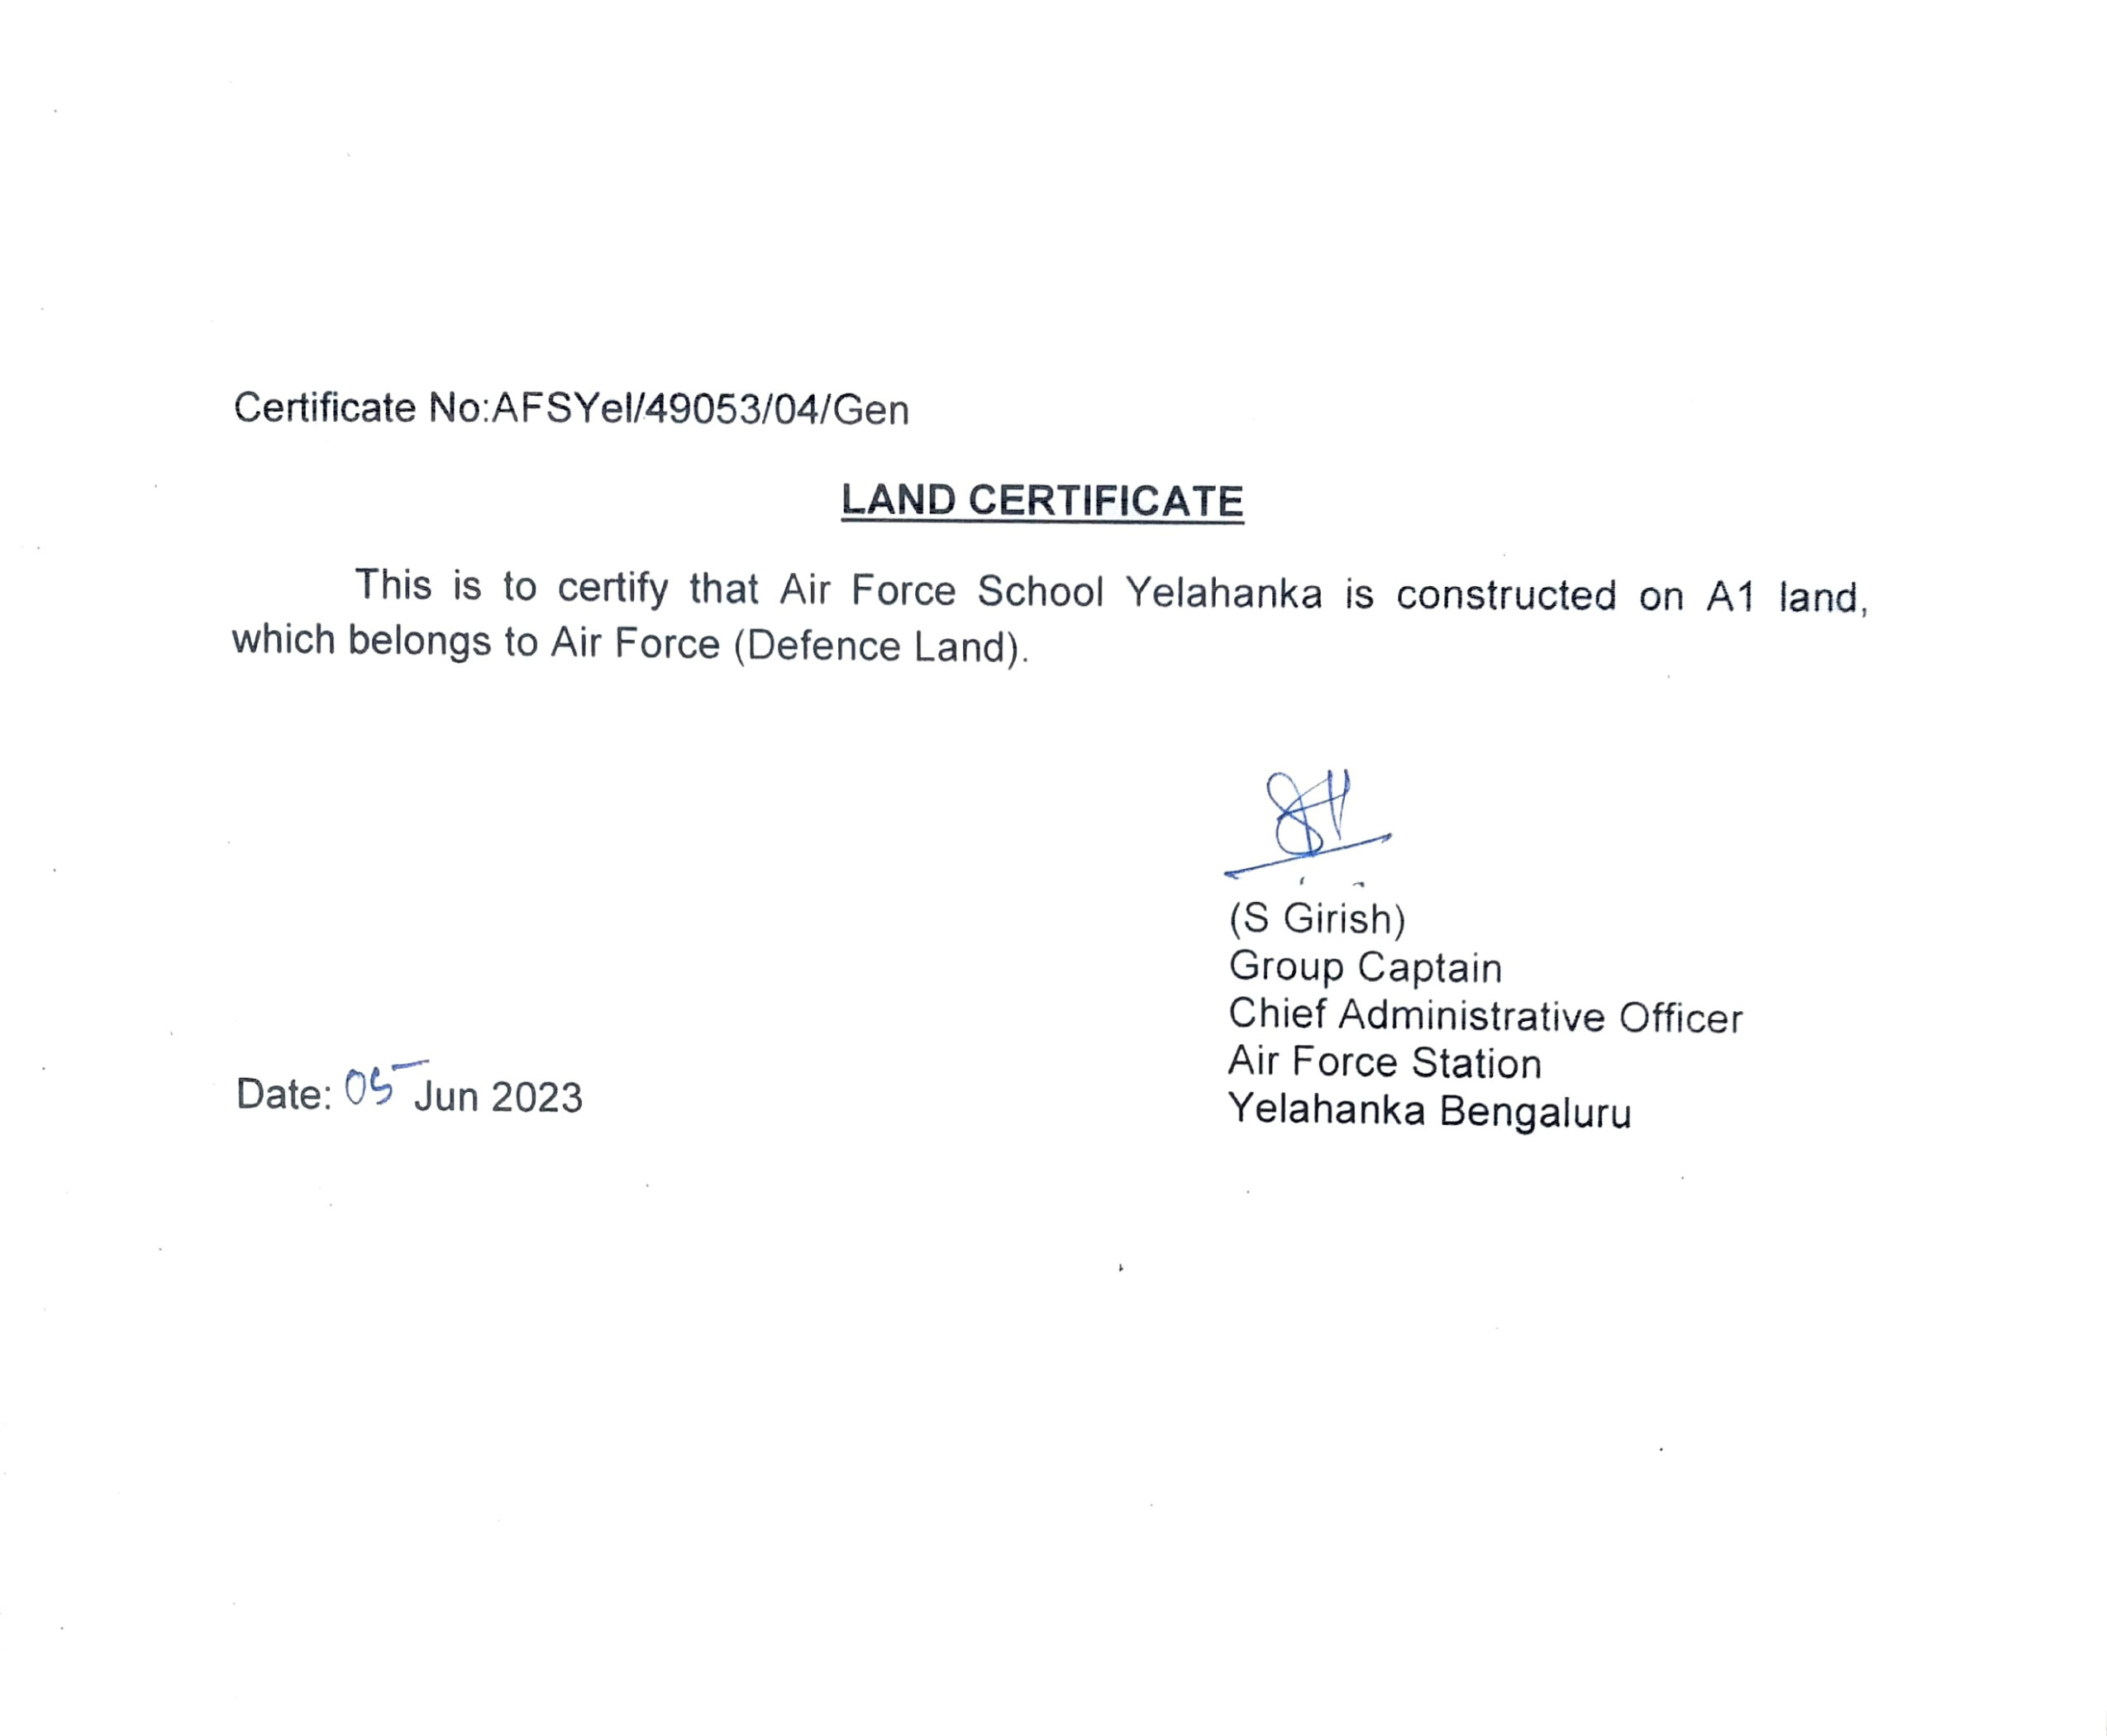 Air Force School Yelahanka, Bangalore